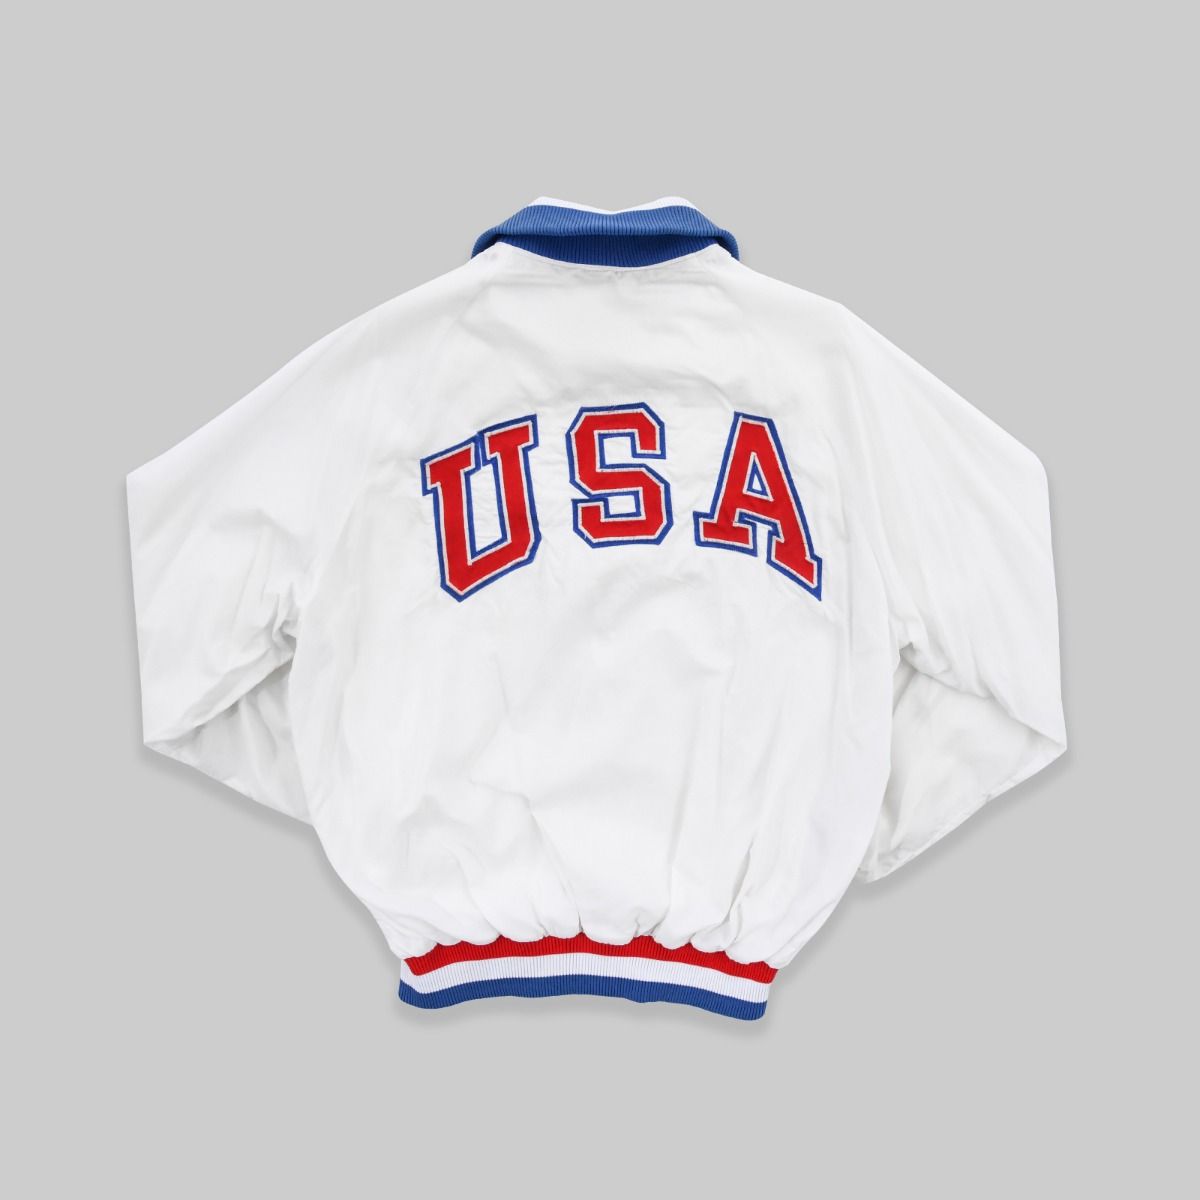 Champion USA Olympic Training Centre Jacket